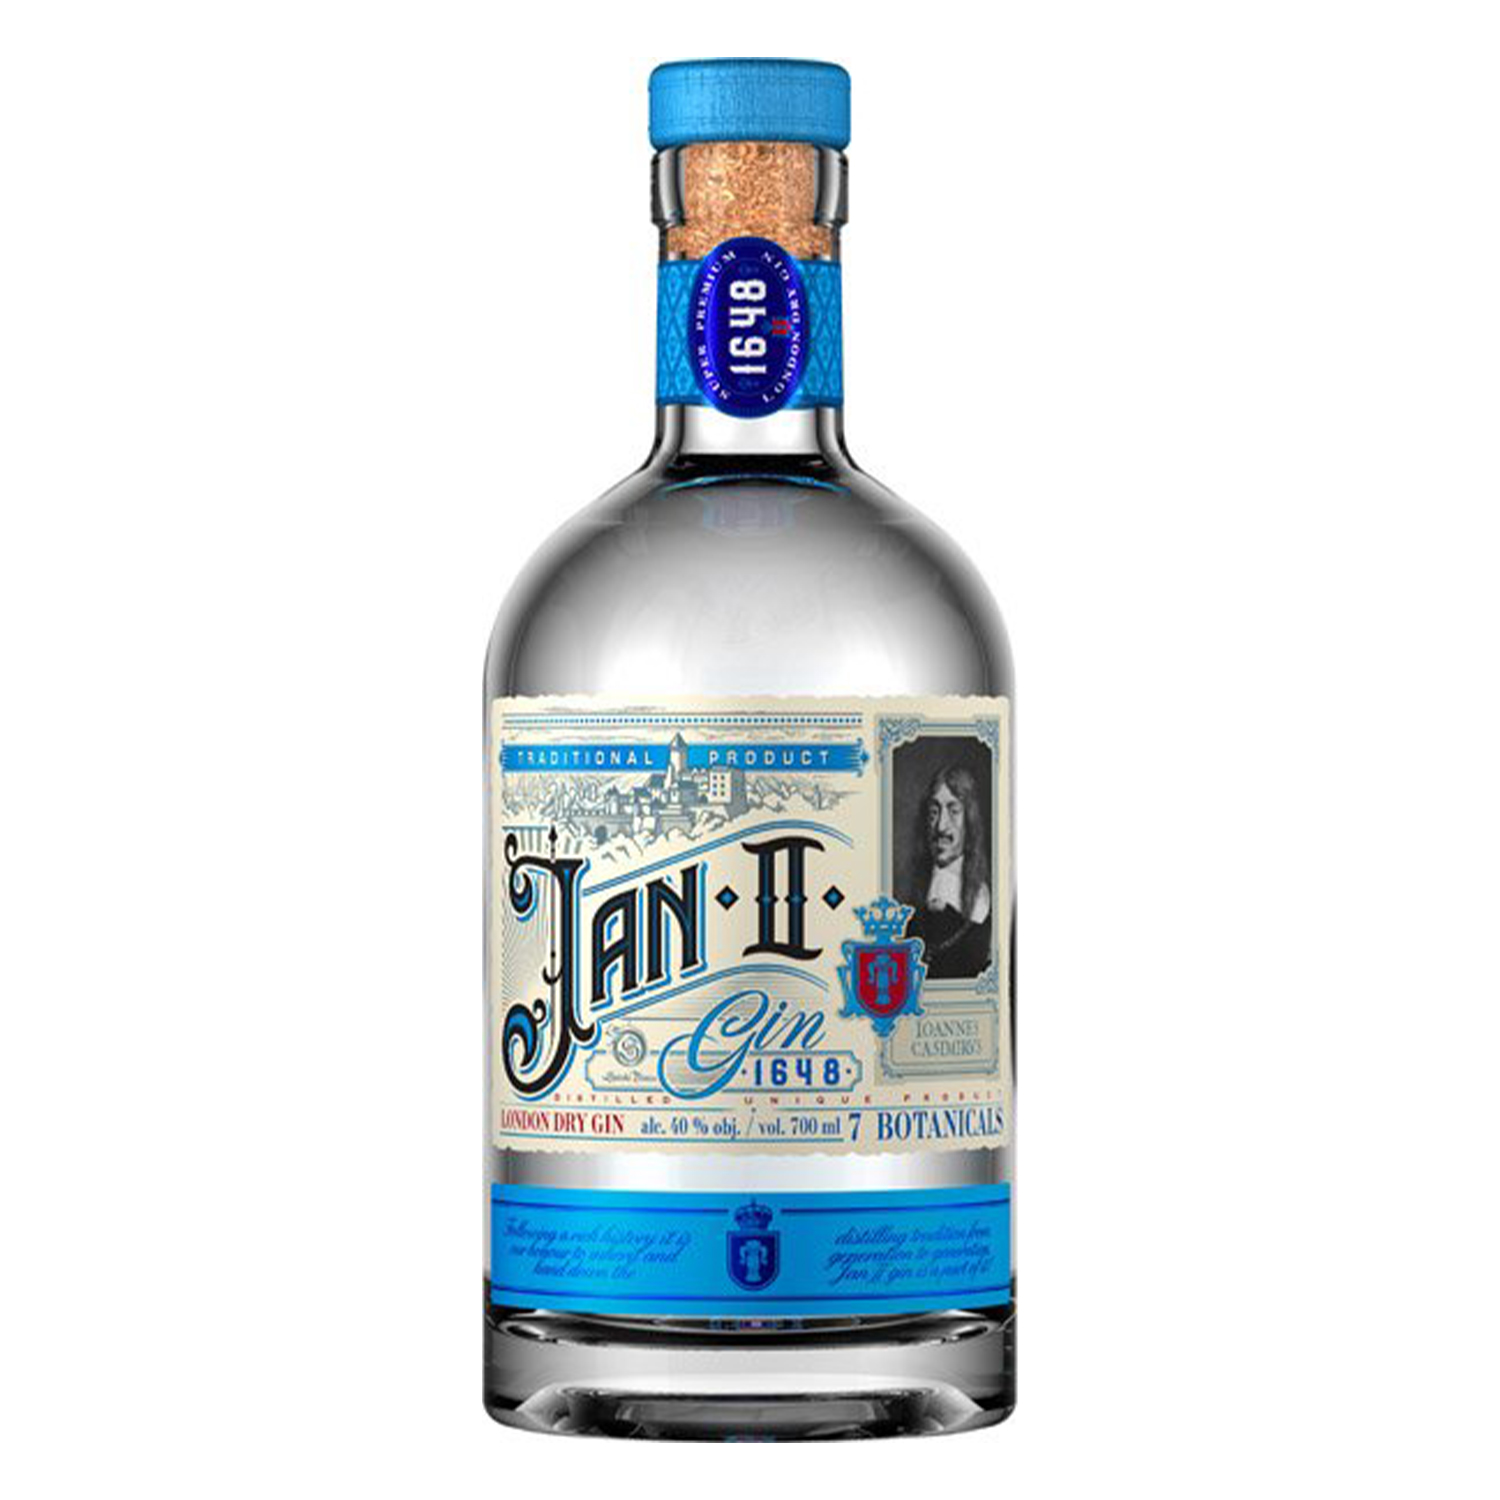 Jan II Gin London dry 40% 0,7L